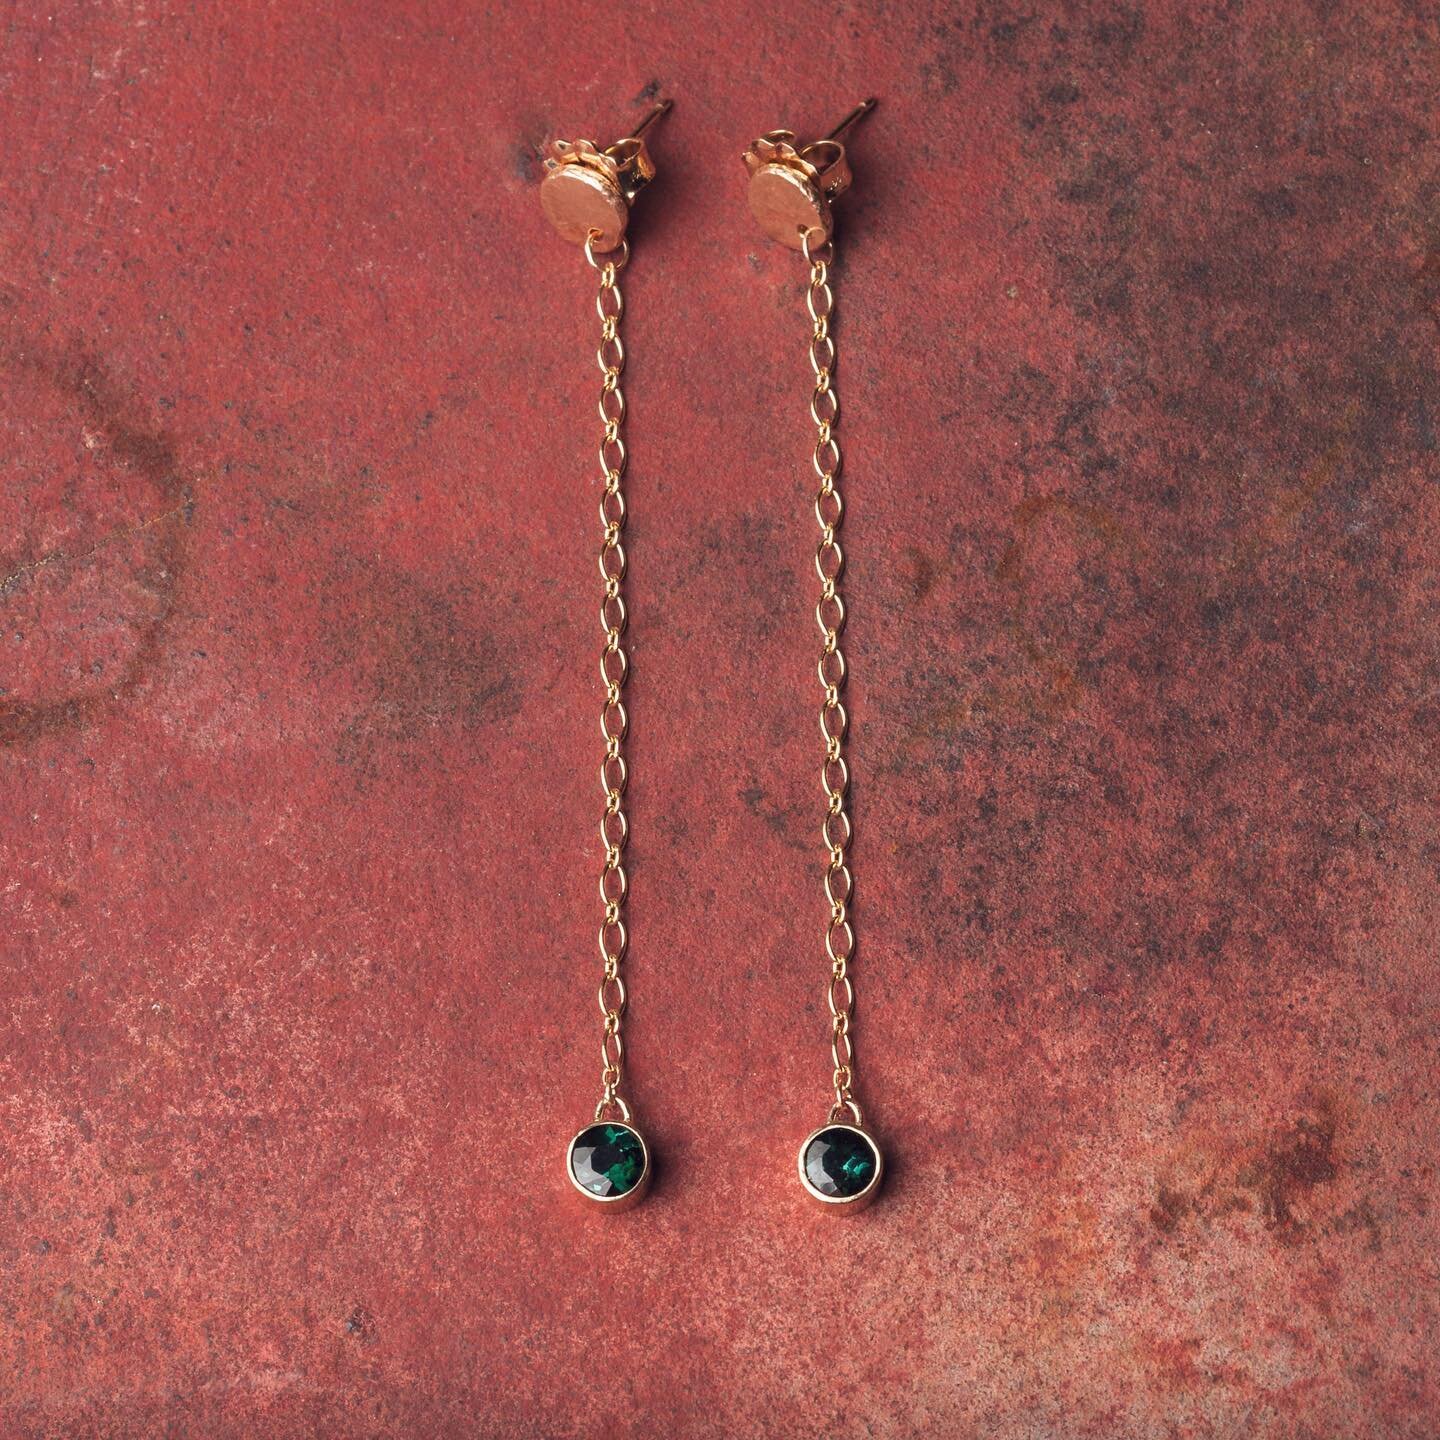 18K Gold Chain Earrings with Tourmaline and 14K Gold Discs nut by Sondrea Larsen @sondrealarsen &nbsp;#tourmaline #goldearrings #goldsetting #goldlife #18k #14k #14kgold #18kgold #goldsmith #goldjewelry #goldlover #jewelry #jewelrymaker #tahoeartist 